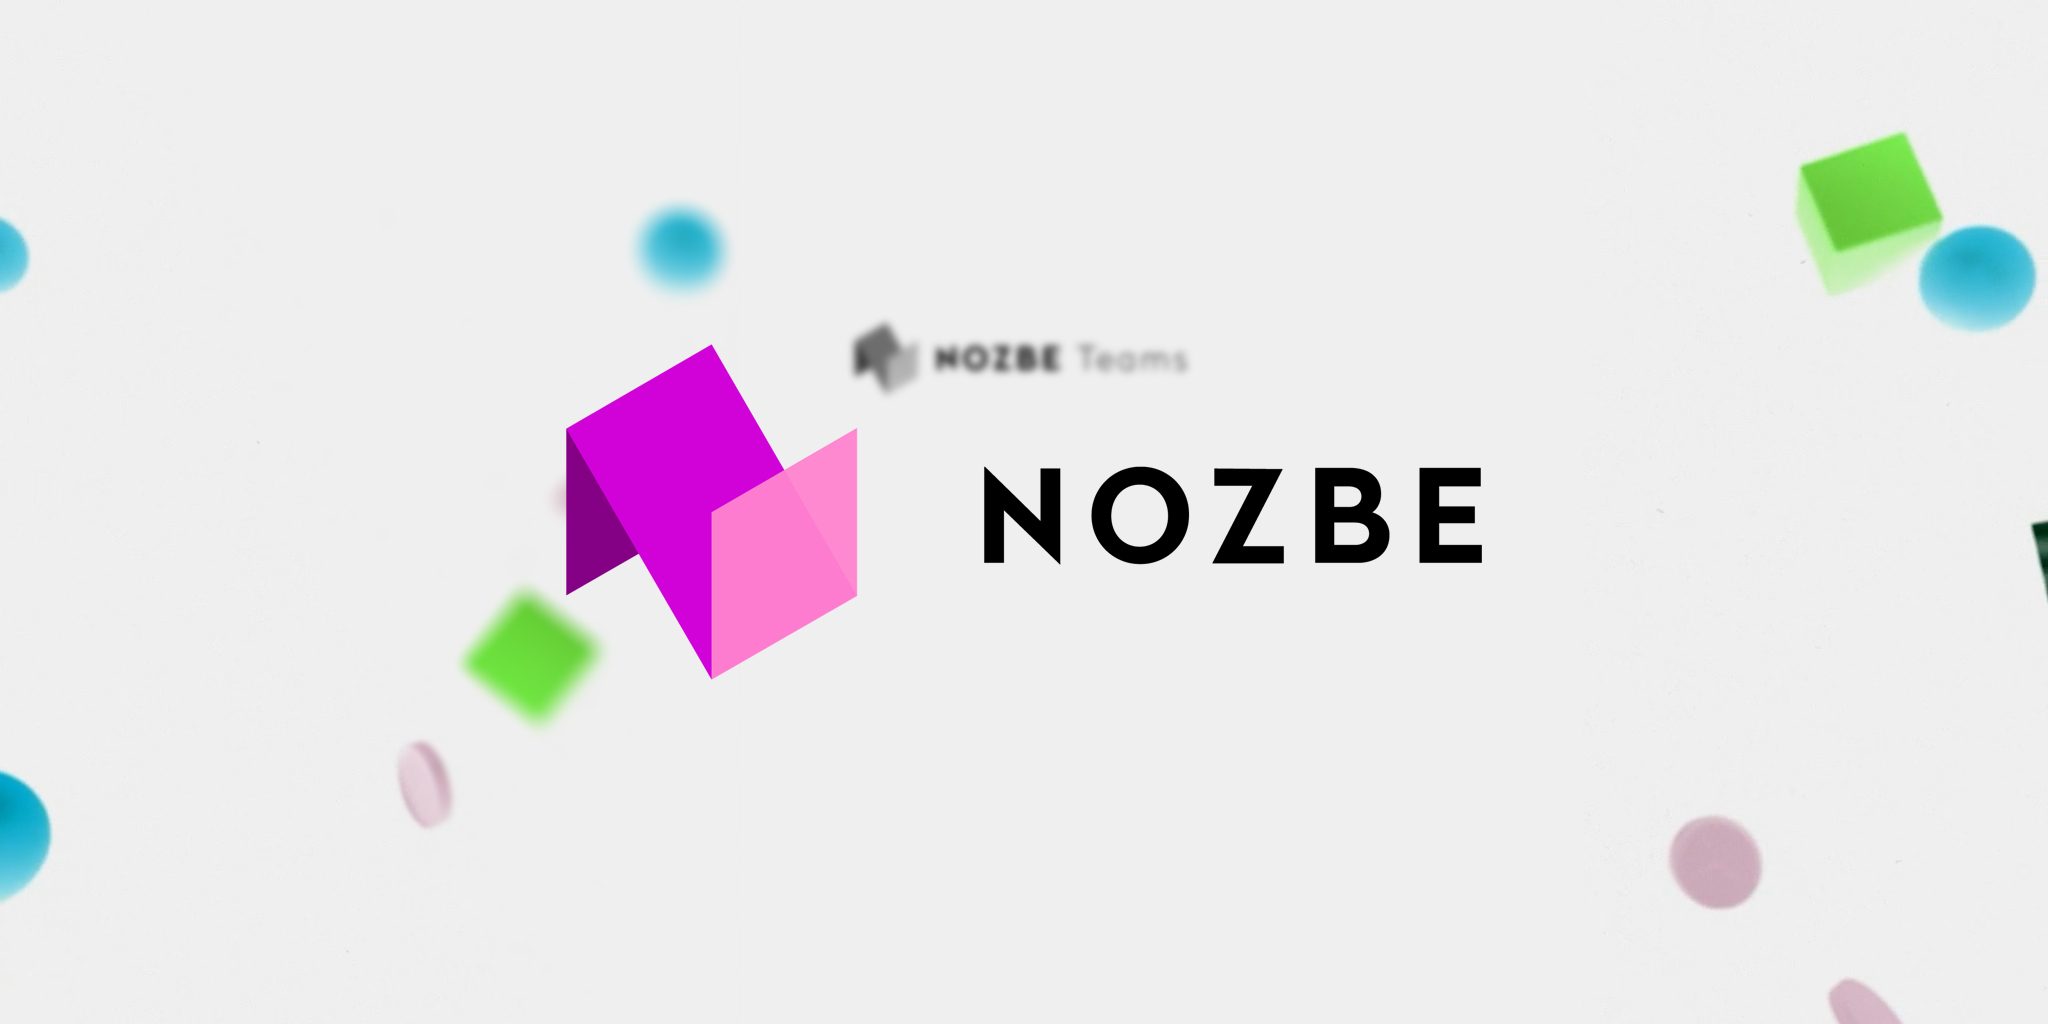 Nozbe Teams is the new version of Nozbe